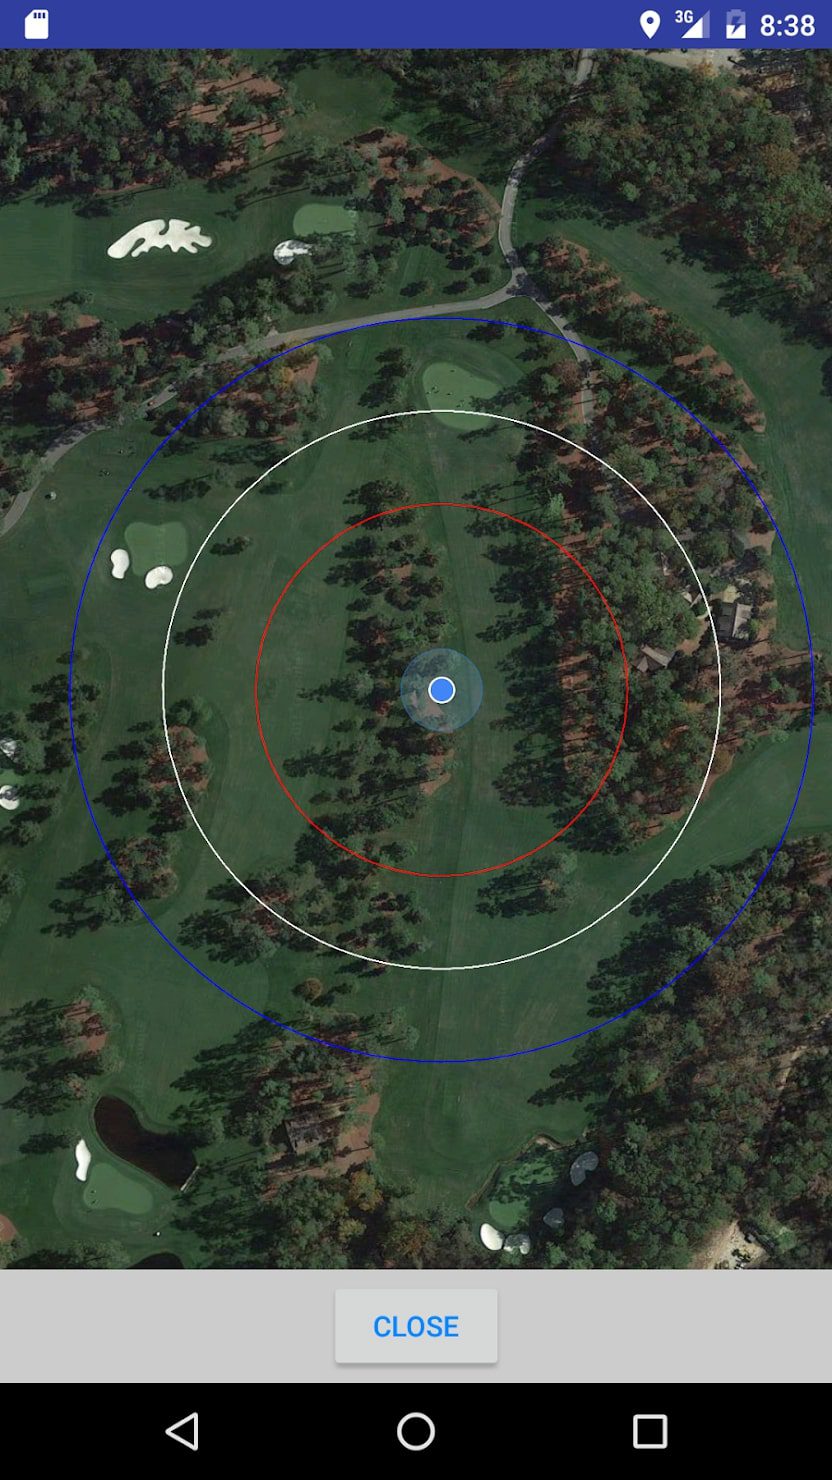 Golf-GPS-Range-Finder-screen-2